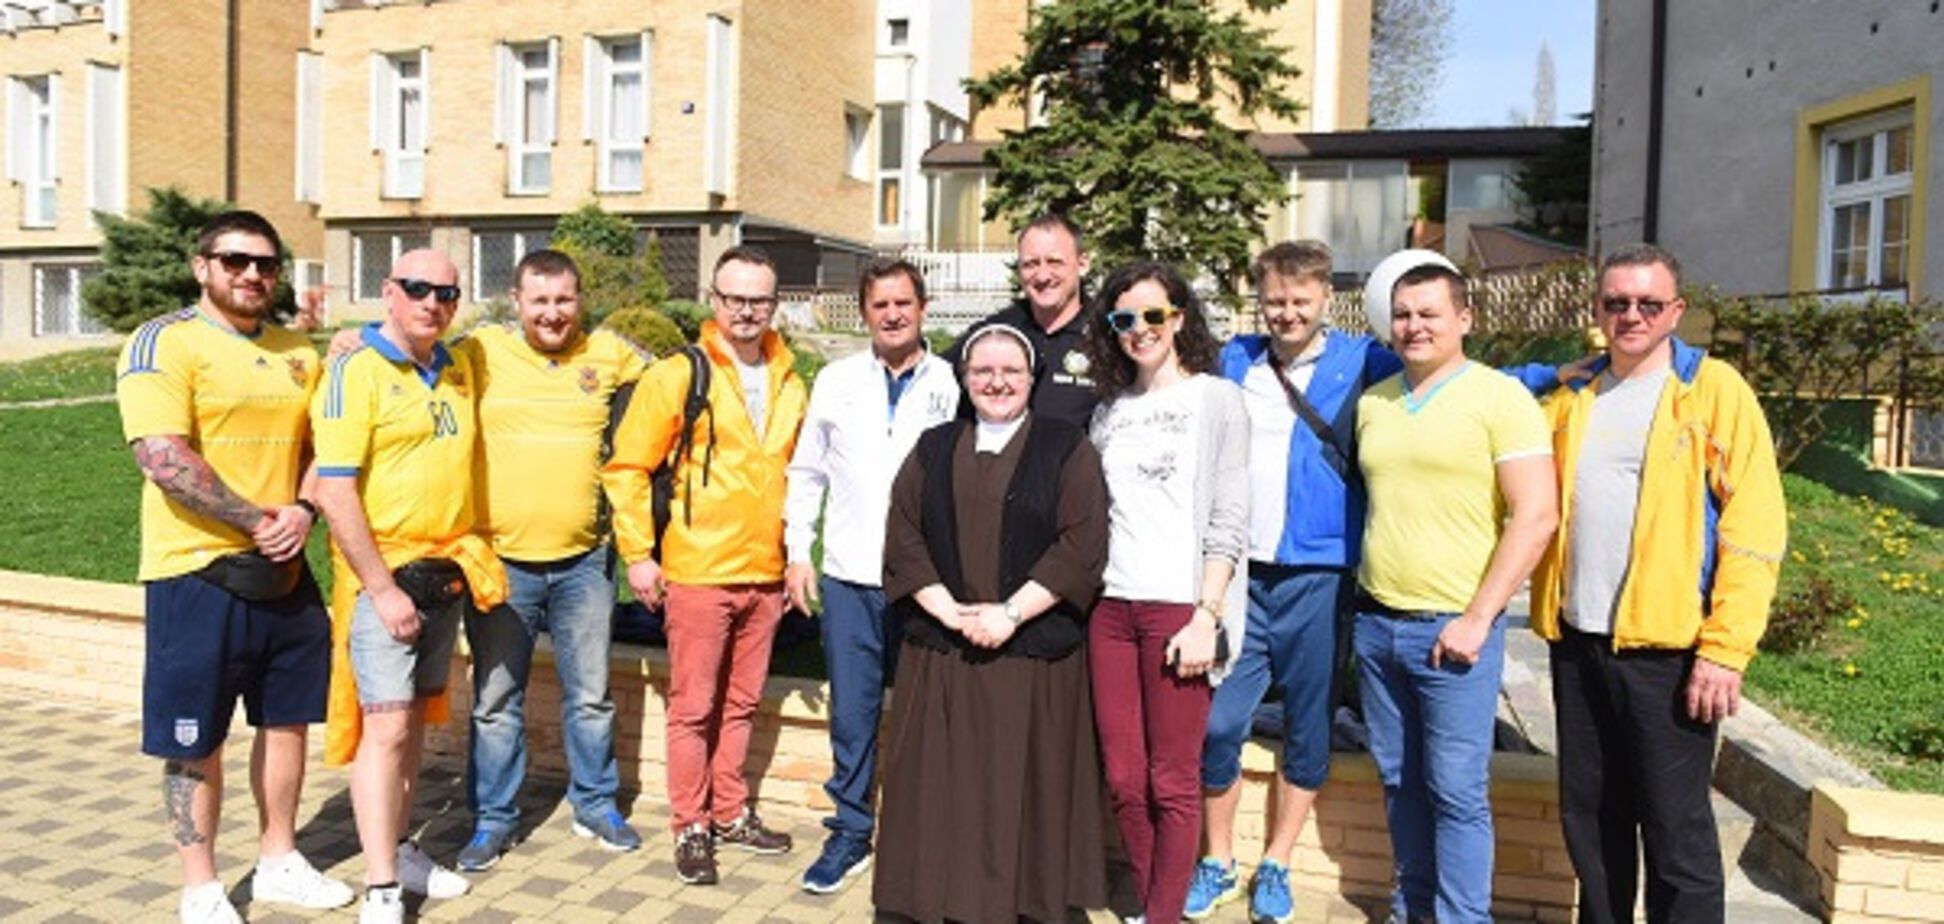 Украинские фанаты 'Вірні збірній' посетили хорватских детей в загребском приюте